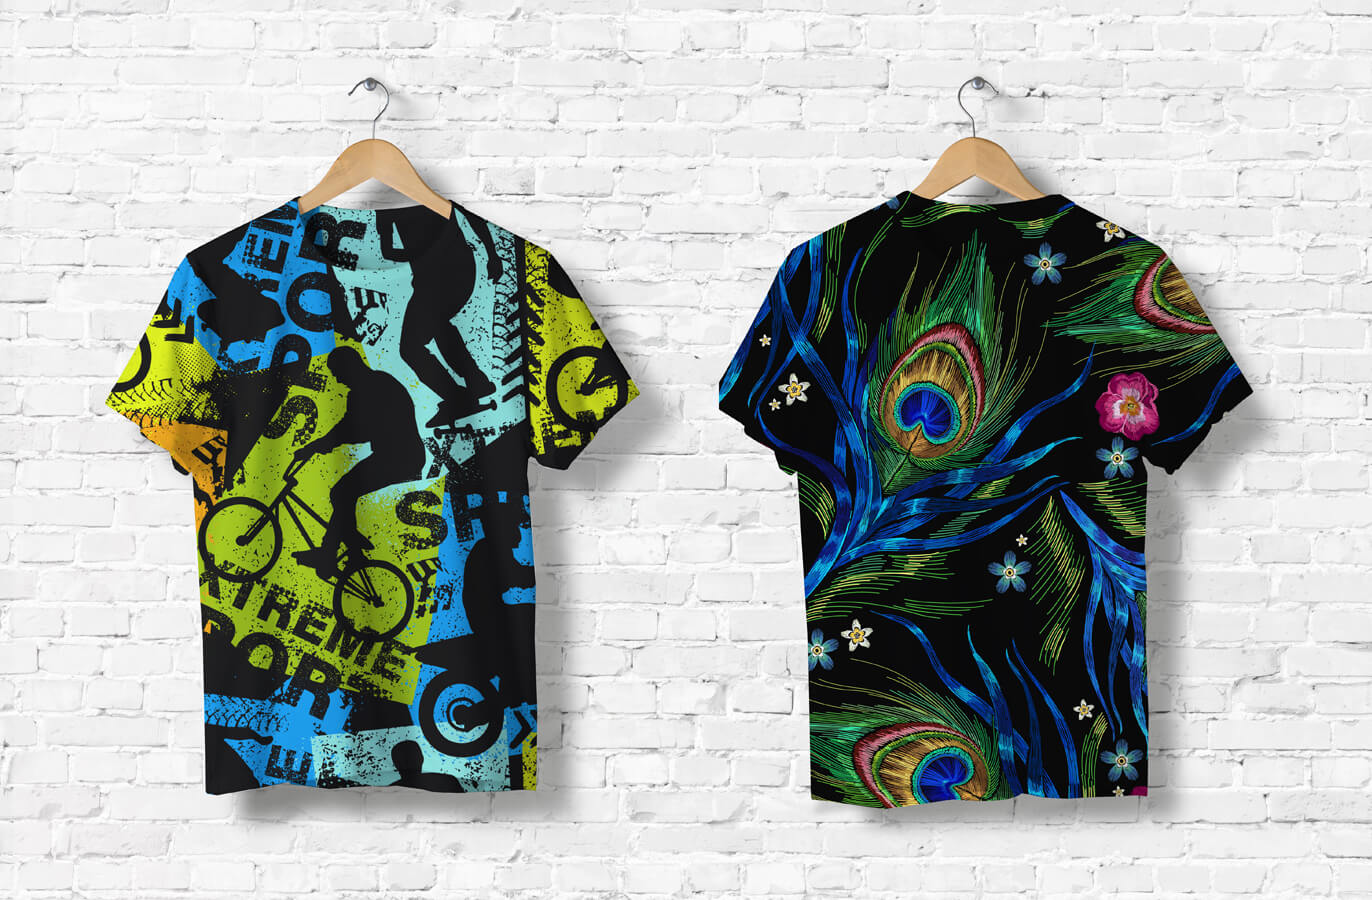 Band New Design Genji - New T Shirt Design - New Genji Design - New Design Genji - cheleder genji t shirt - NeotericIT.com